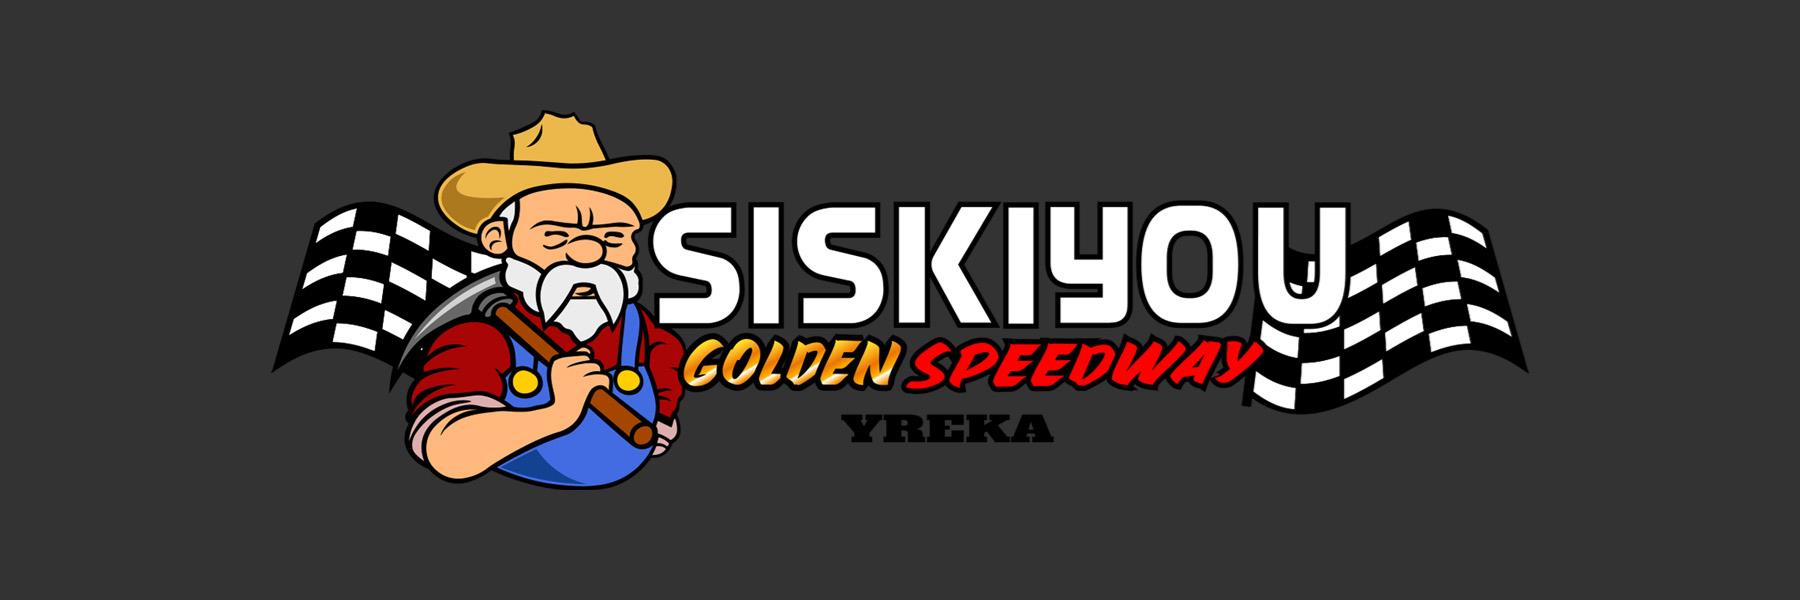 7/15/2022 - Siskiyou Golden Speedway